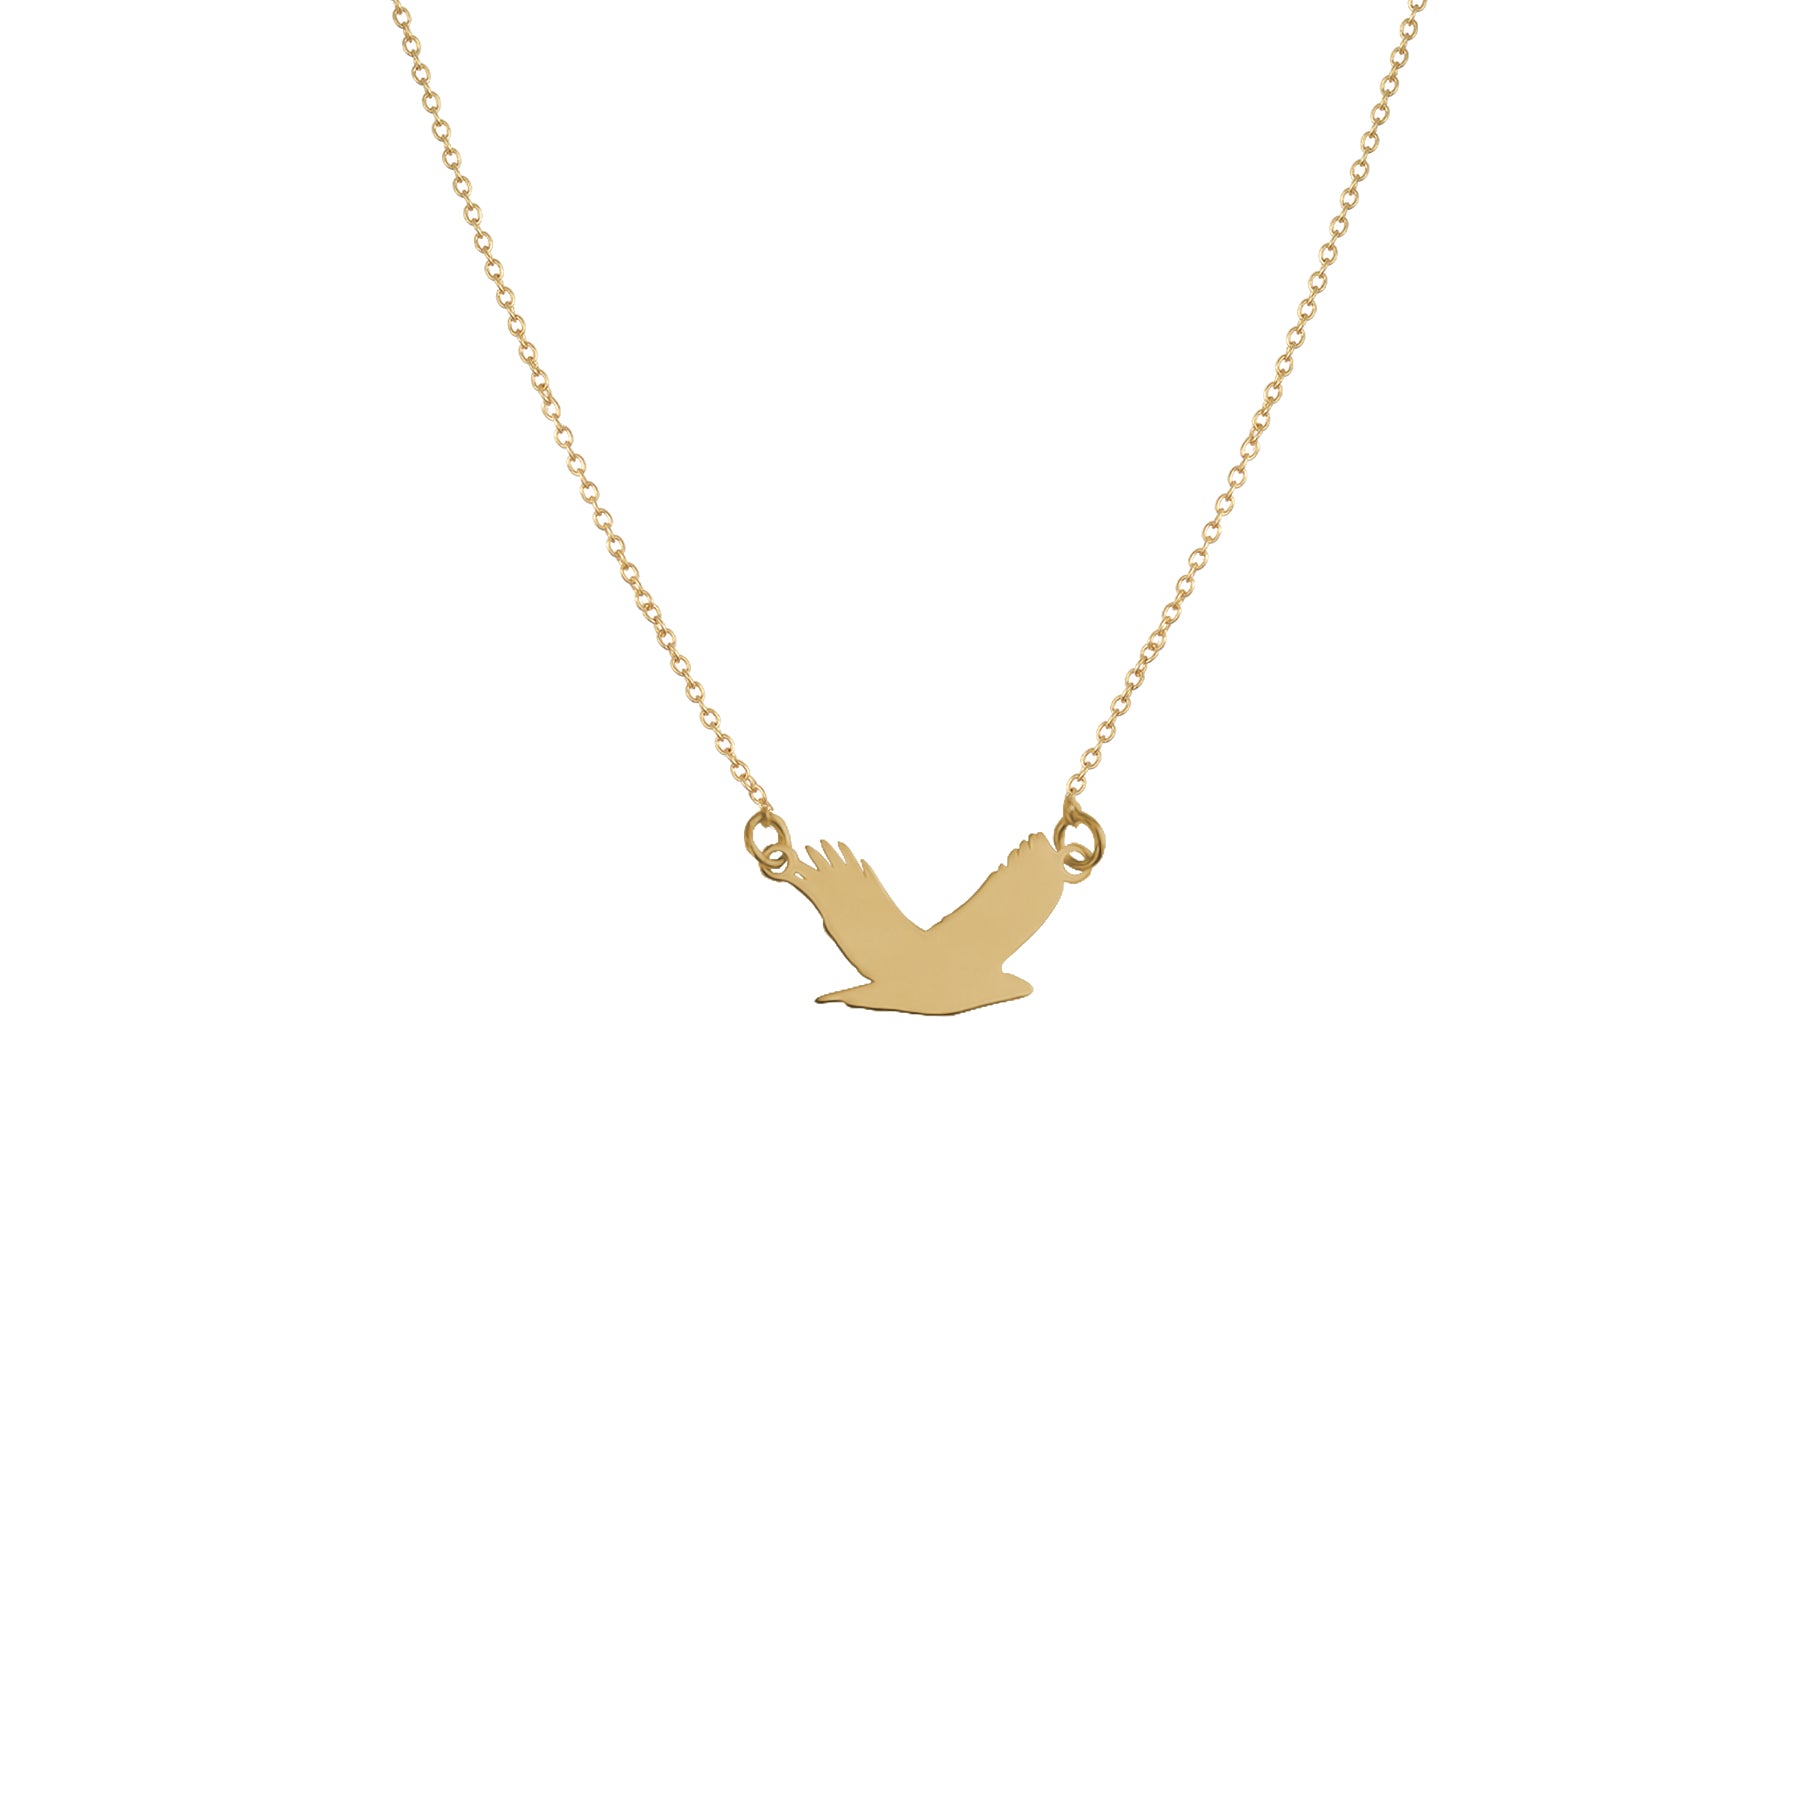 Gold eagle necklace